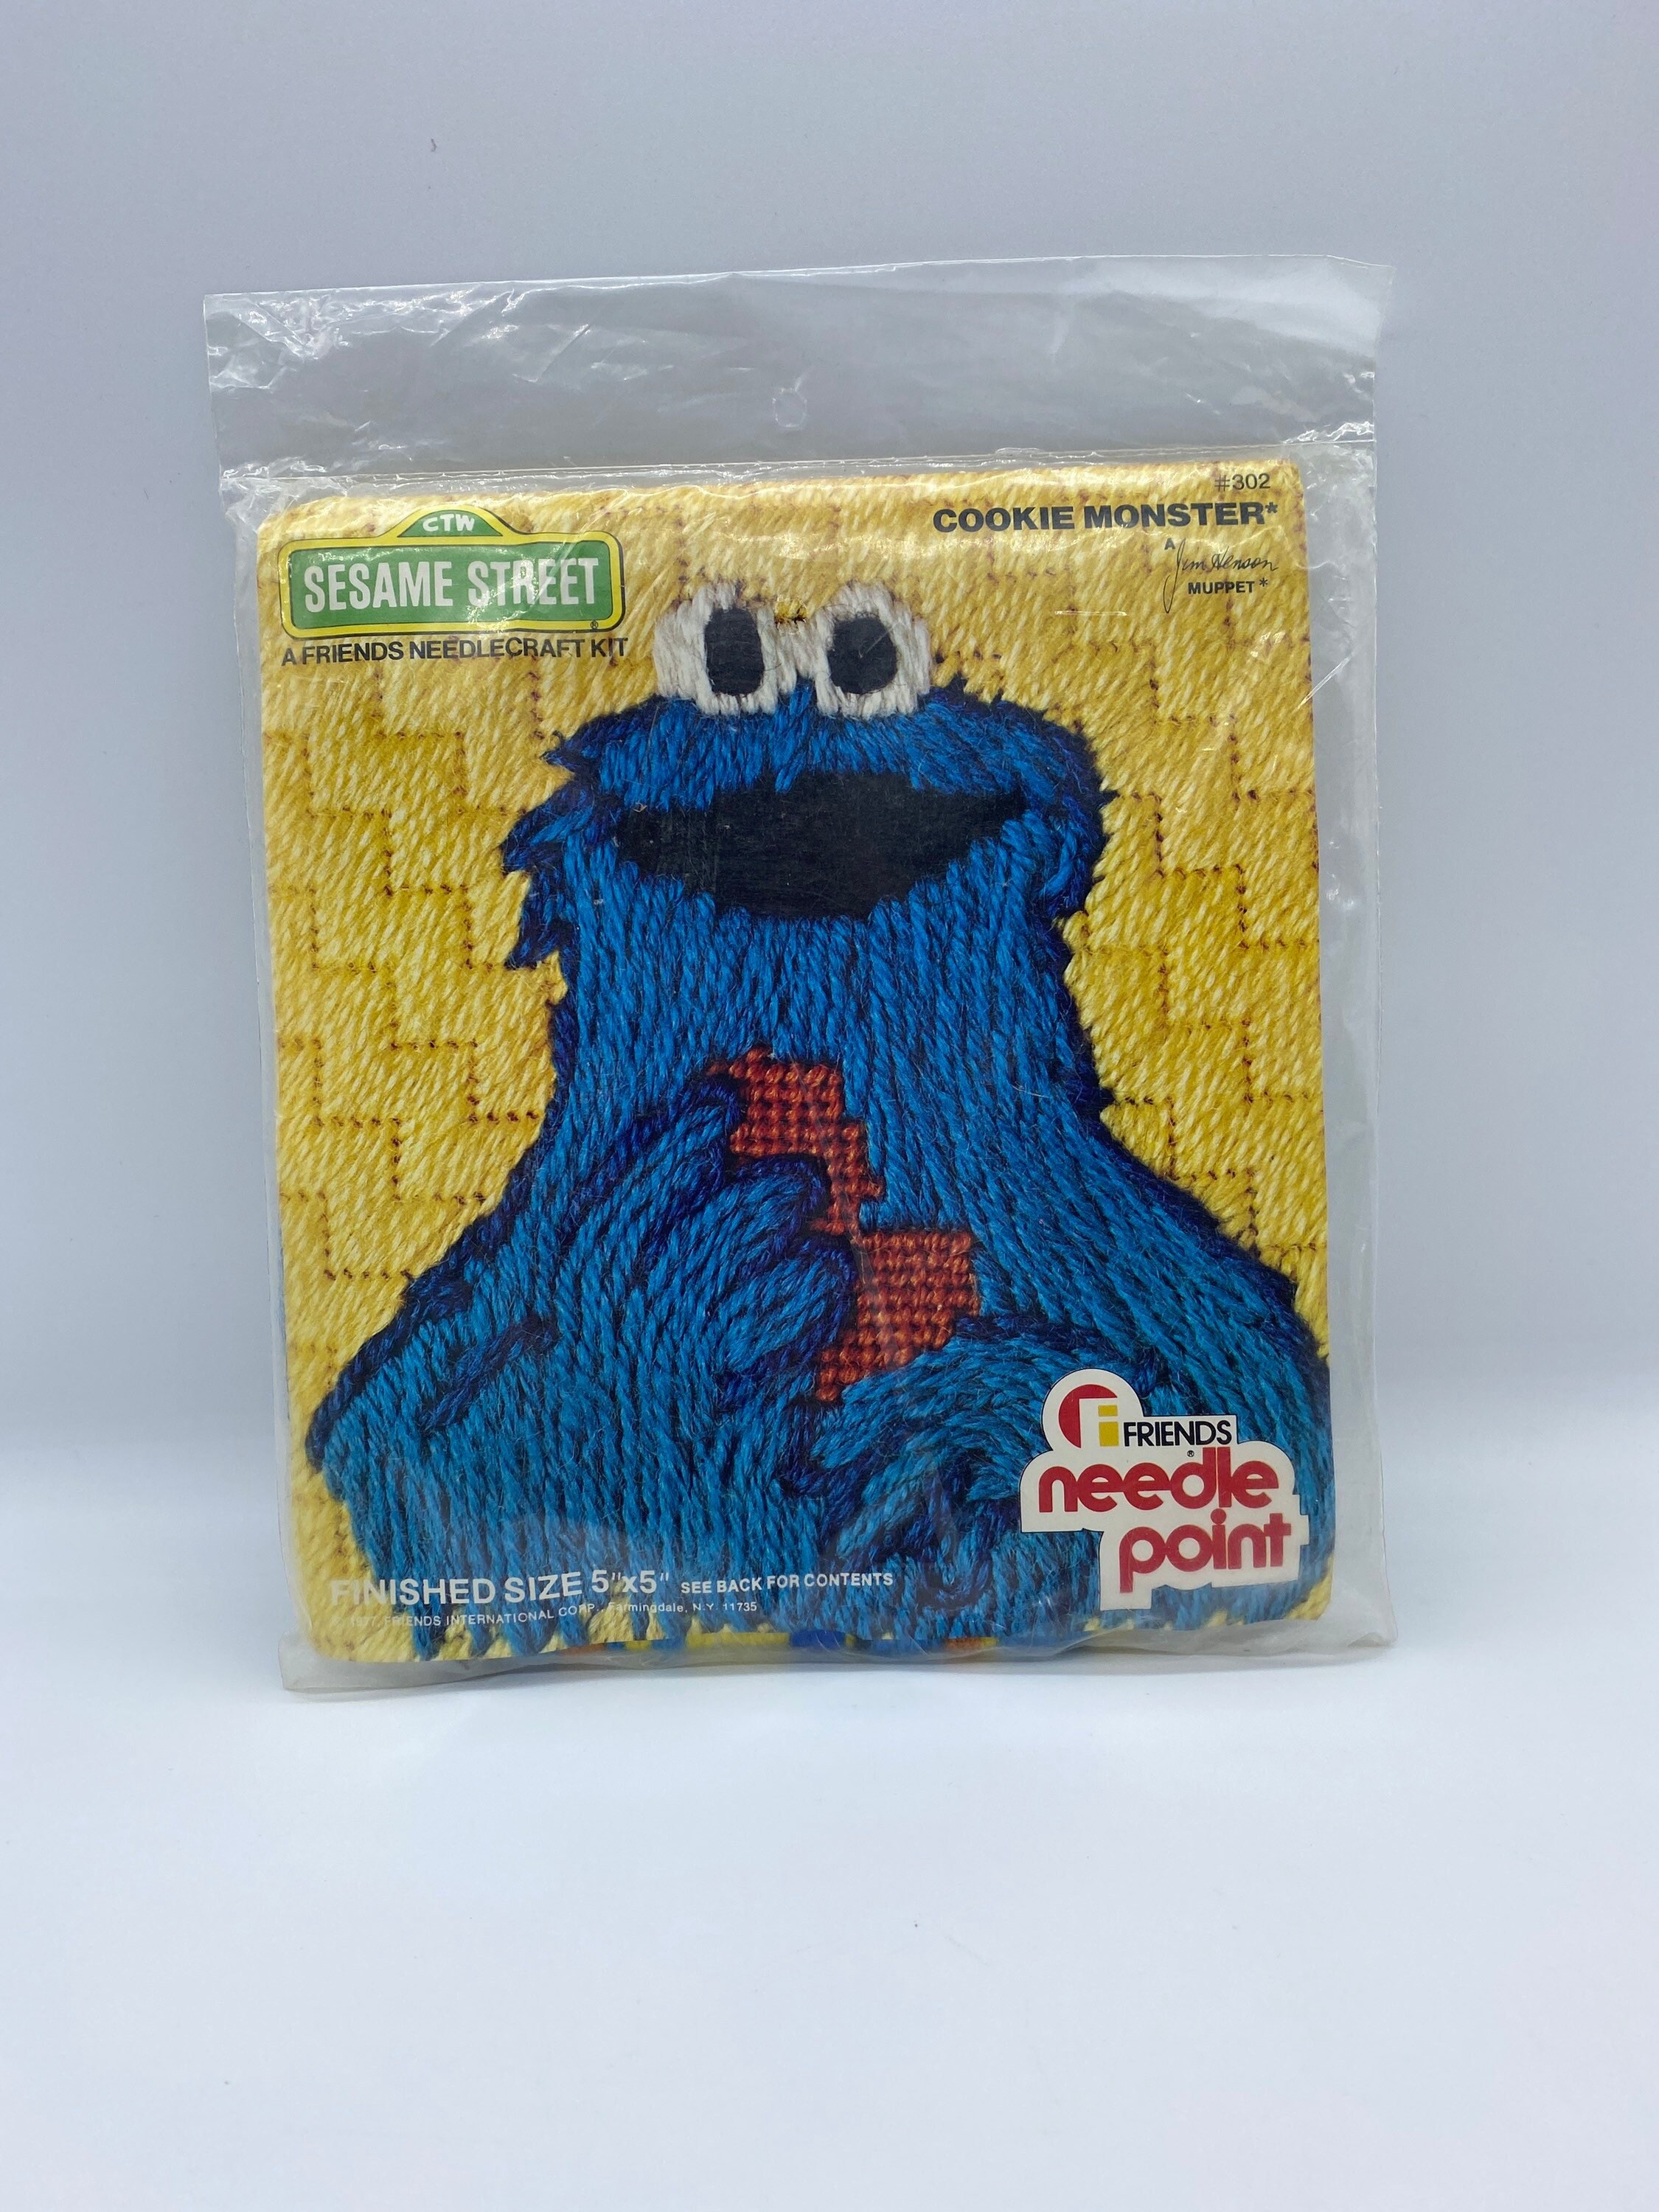 Krümelmonster Cookie Monster Sesamstrasse Aufnäher Patch Bügelbild